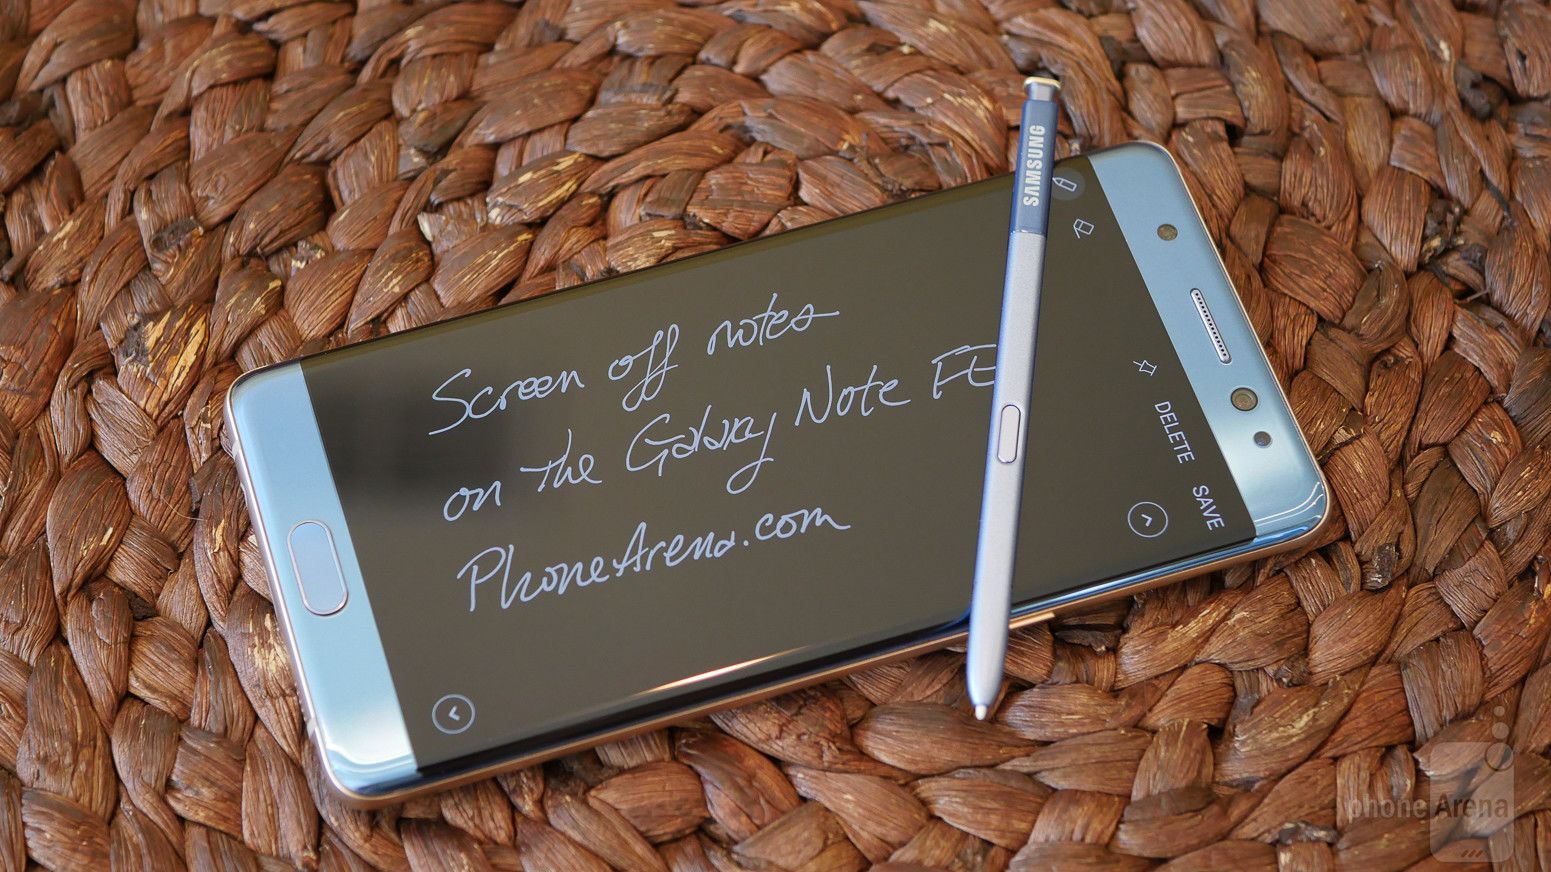 Galaxy note edition. Samsung Galaxy Note Fe. Samsung Galaxy Note Fan Edition. Samsung Note 7 Fe. Galaxy Note 7 Fan Edition.